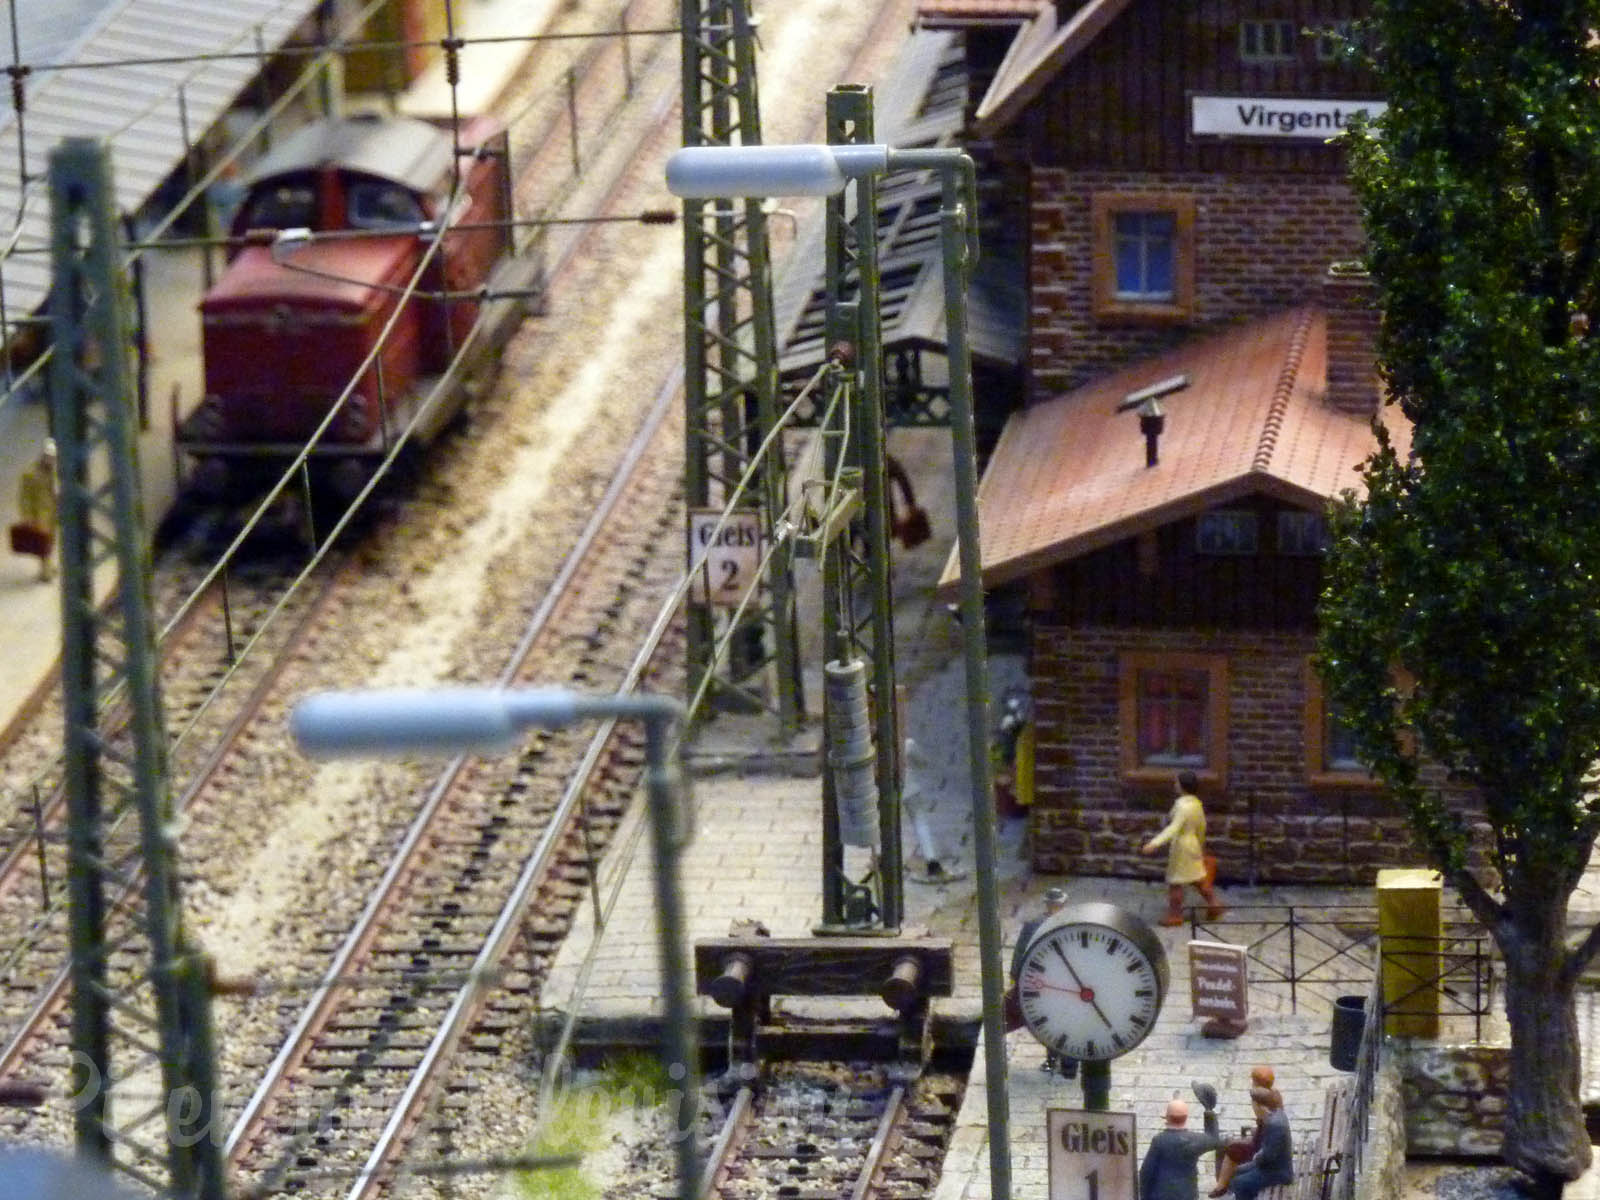 Wim de Zee Virgental - Steam locomotive and ho scale trains - Model railroad operation session